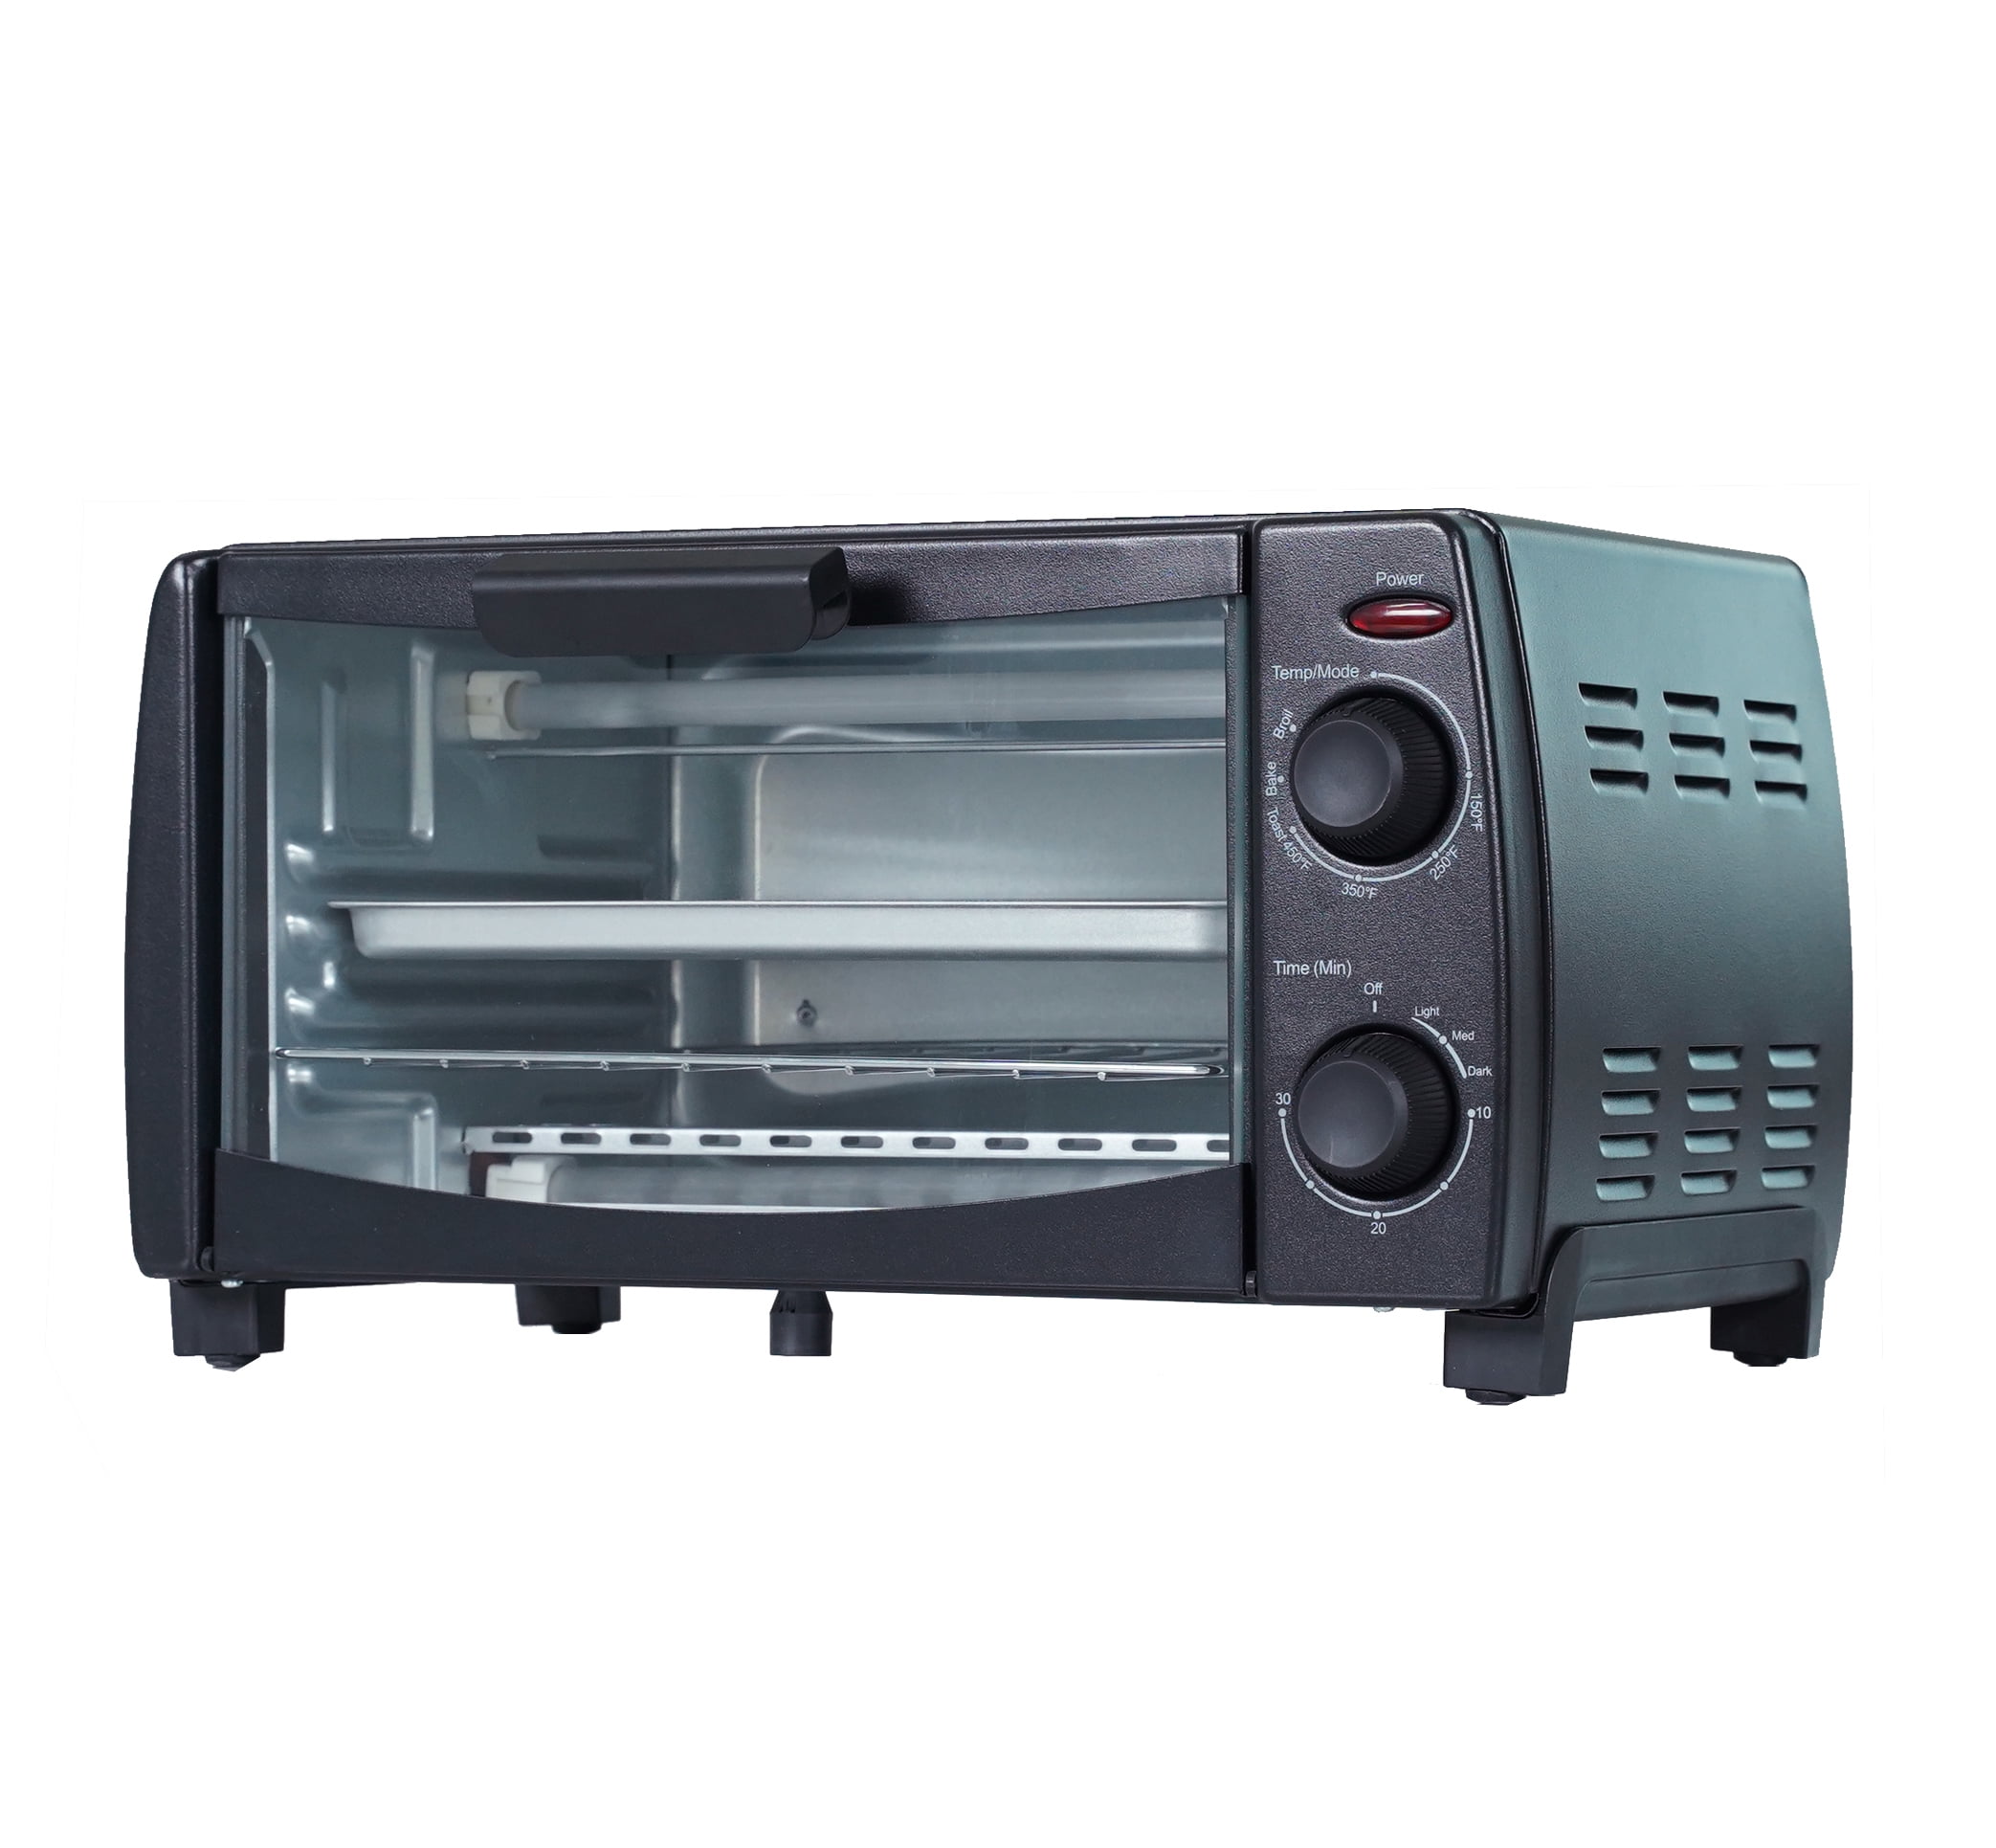 Toaster Ovens & Toasters